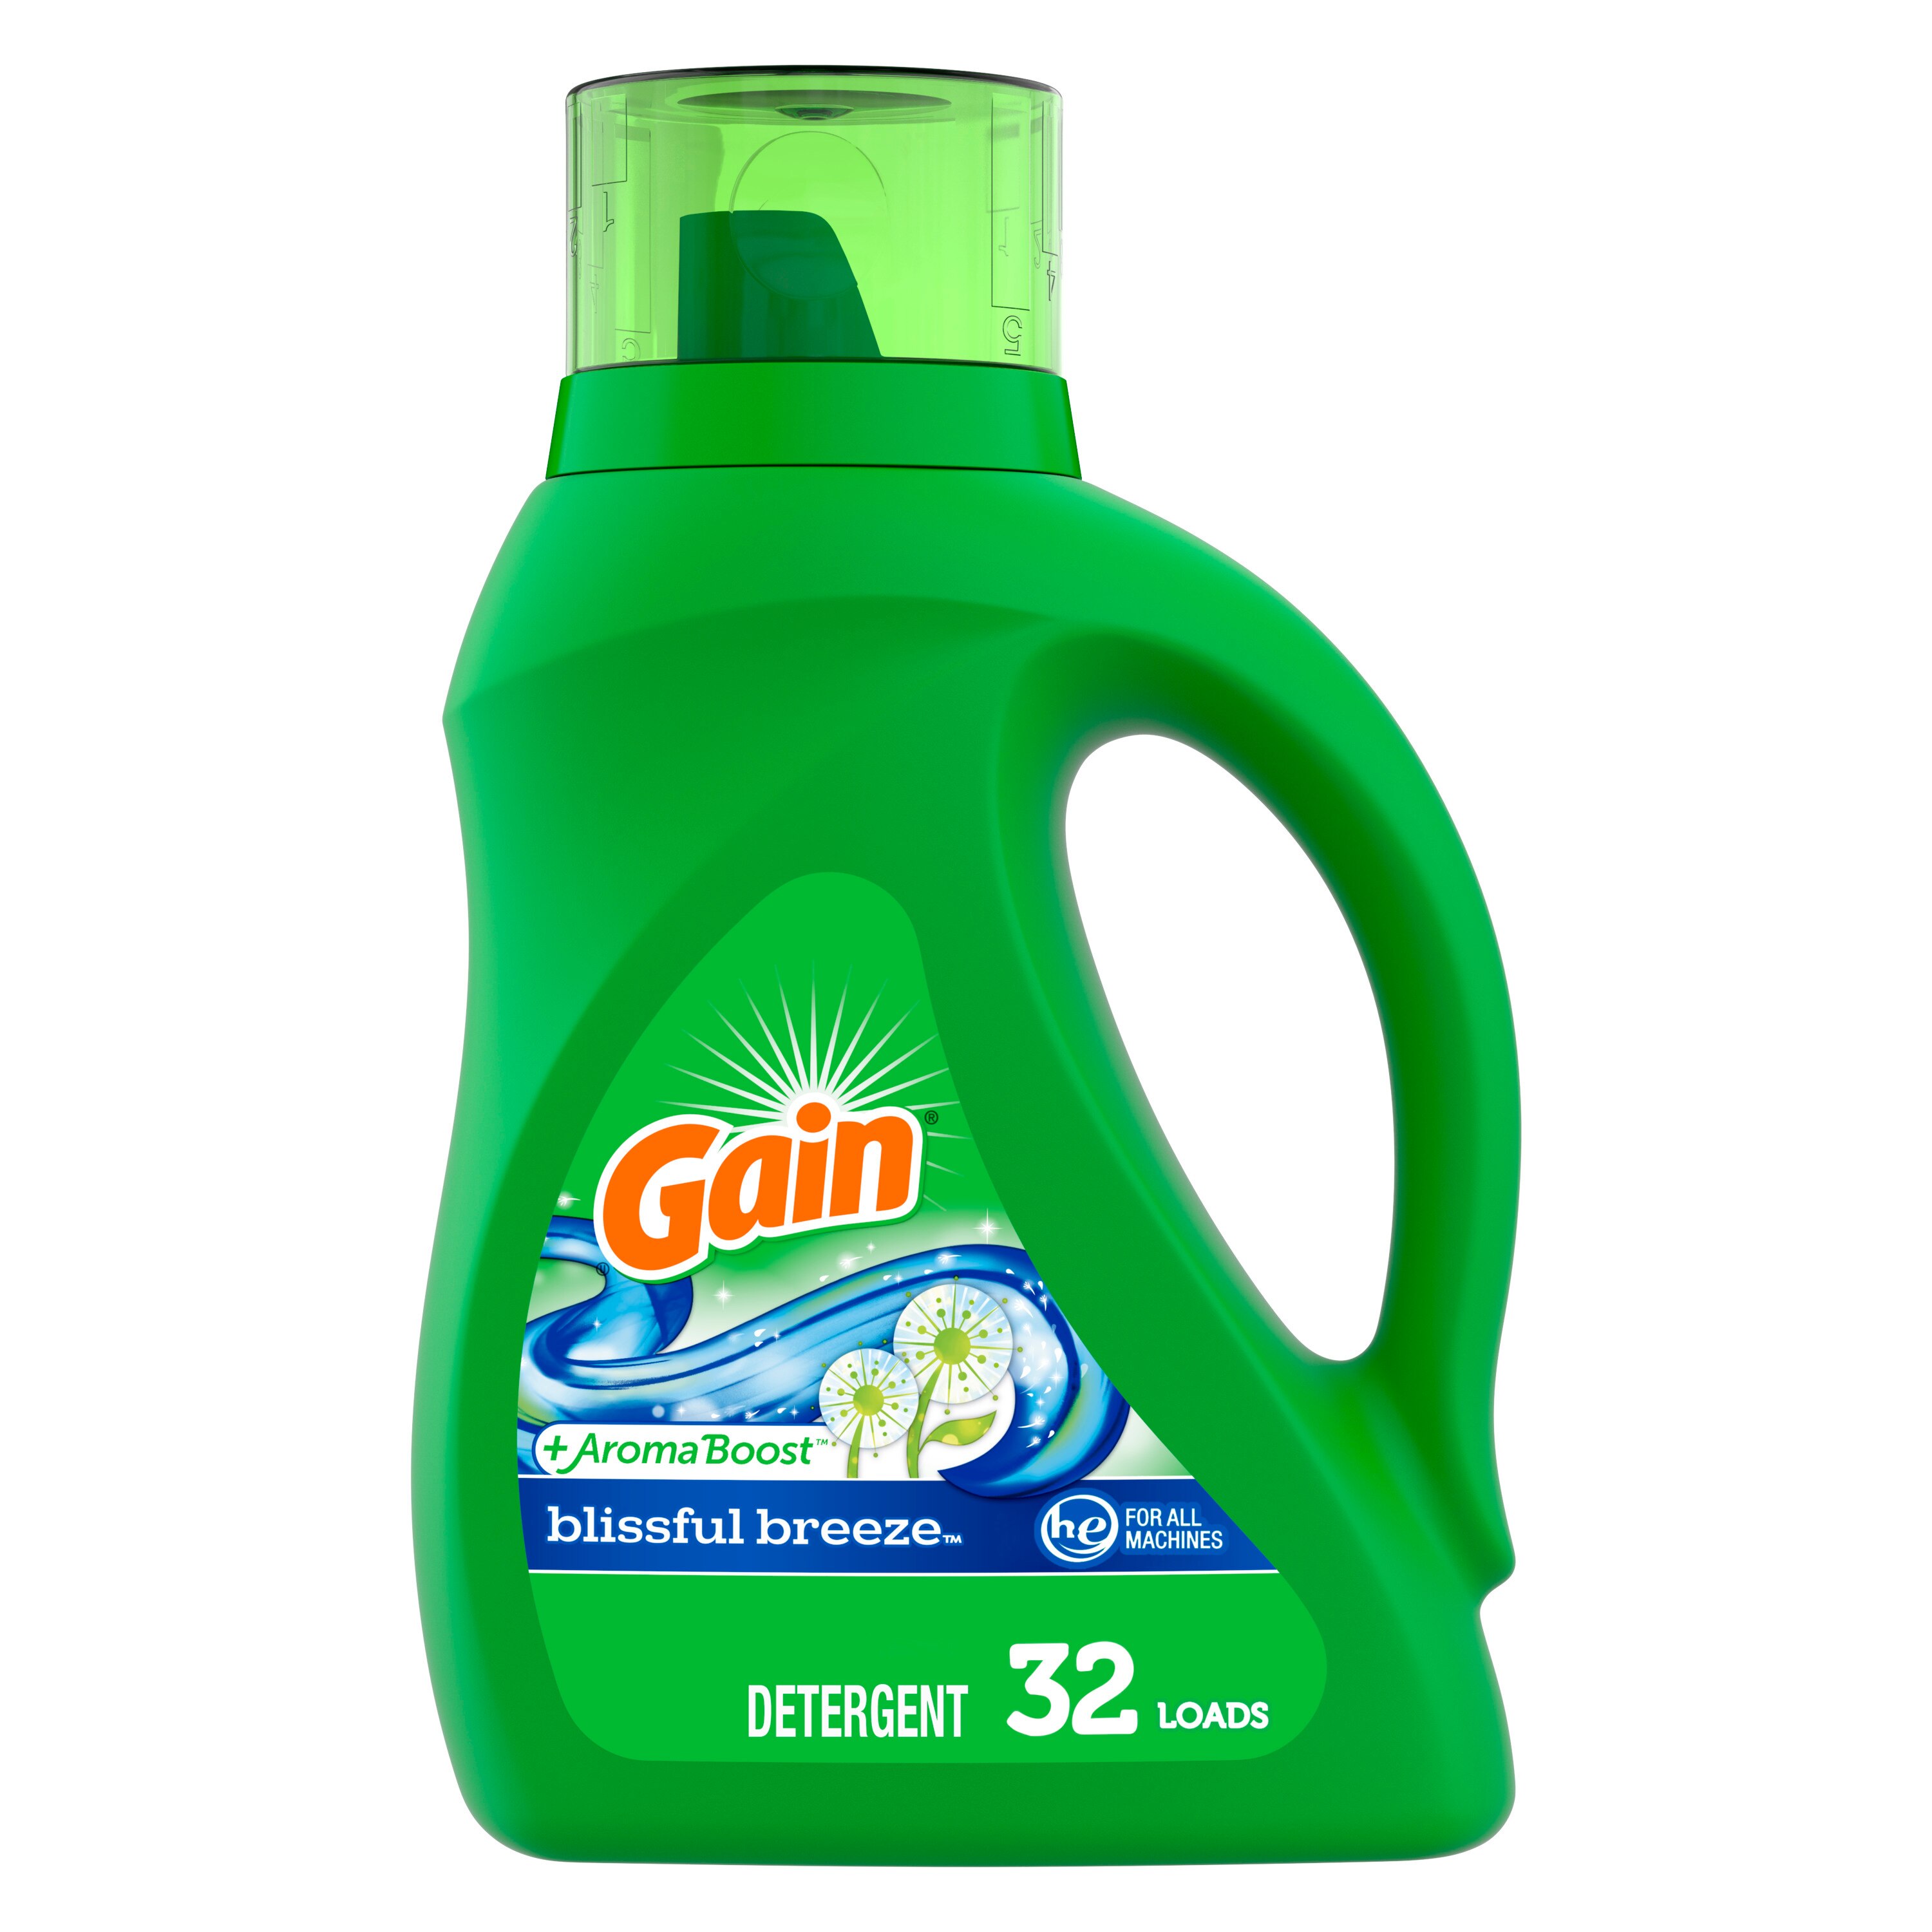 Gain + Aroma Boost Liquid Laundry Detergent, Blissful Breeze Scent, 32 Loads, 50 fl oz, HE Compatible